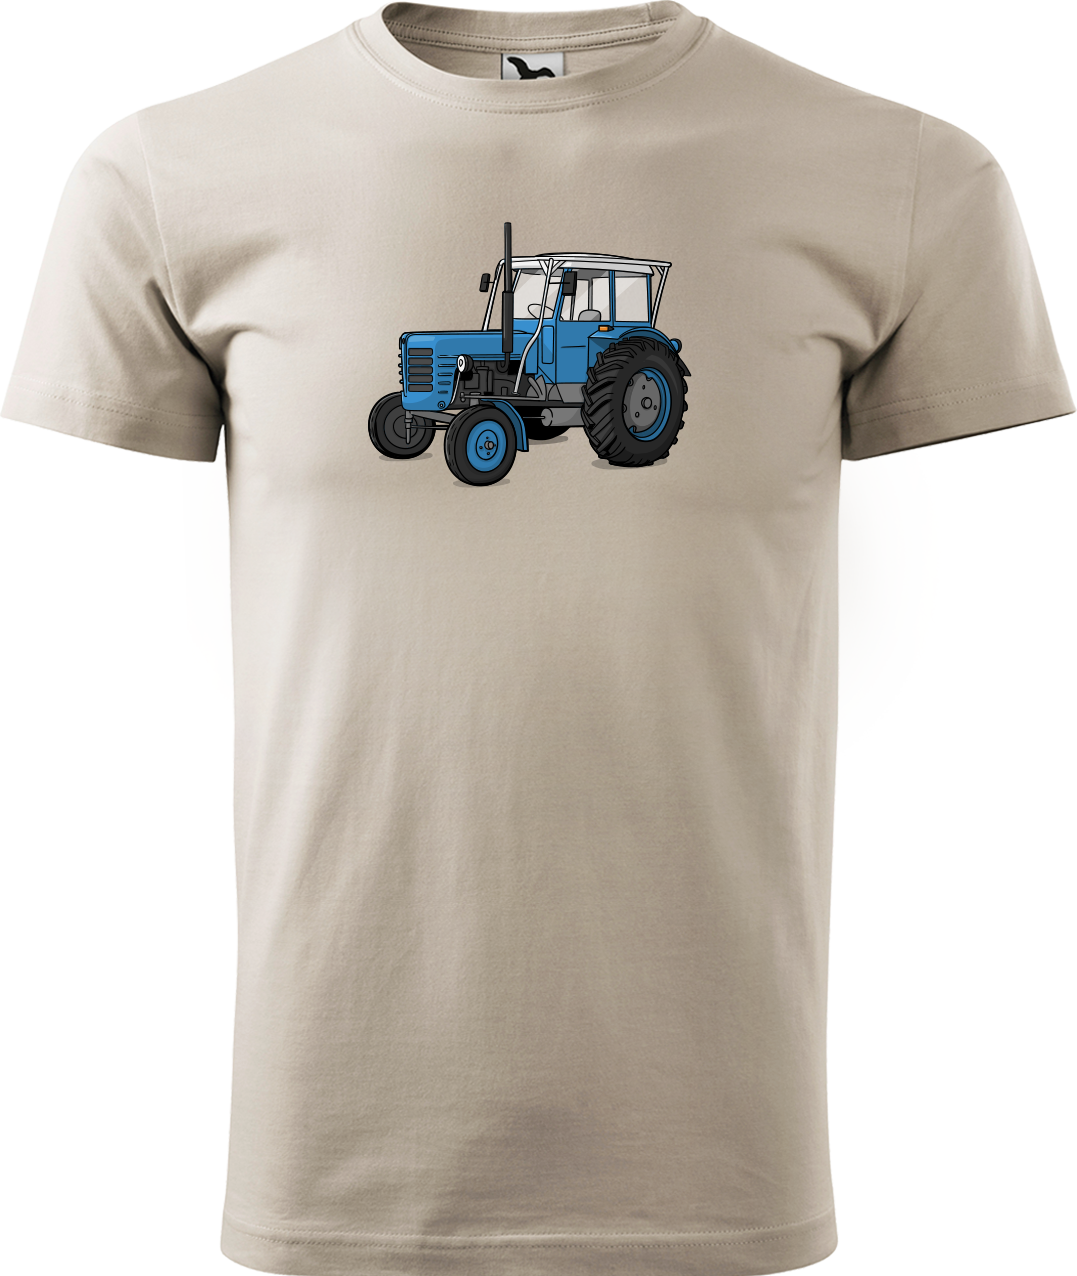 Tričko s traktorem - Starý traktor Velikost: XL, Barva: Béžová (51)